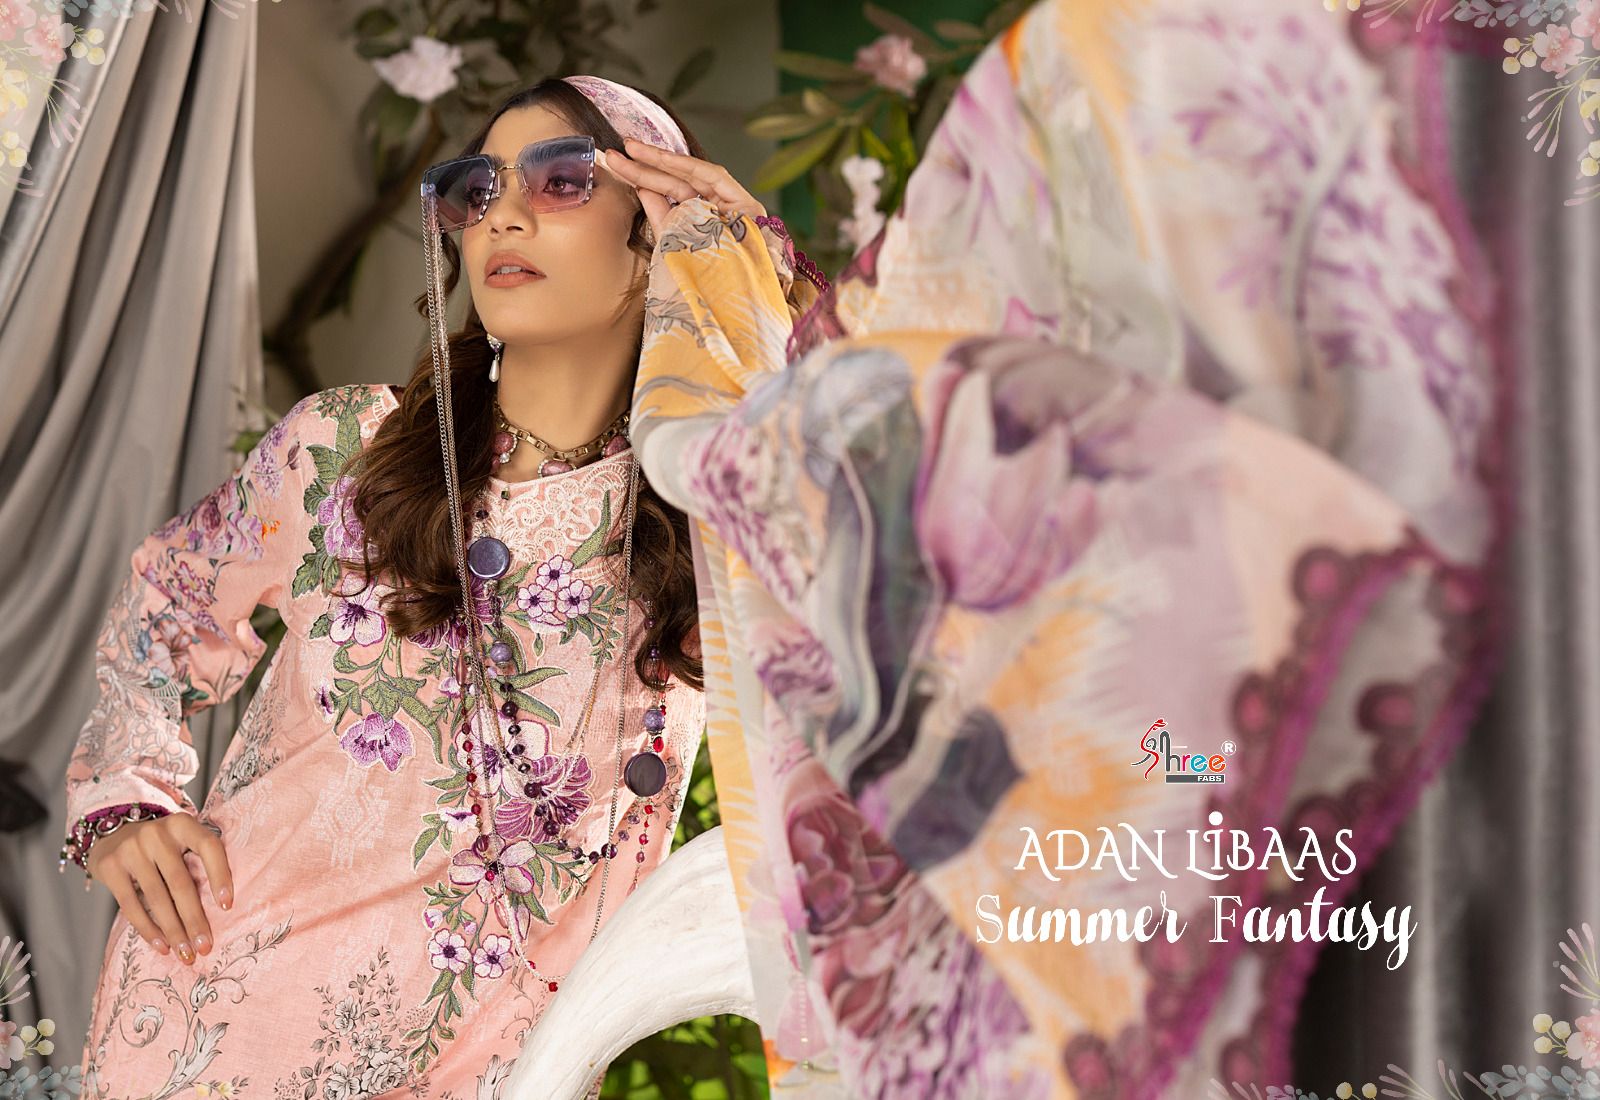 shree fabs adan libaas summer fantasy cotton new and modern look salwar suit with cotton dupatta catalog